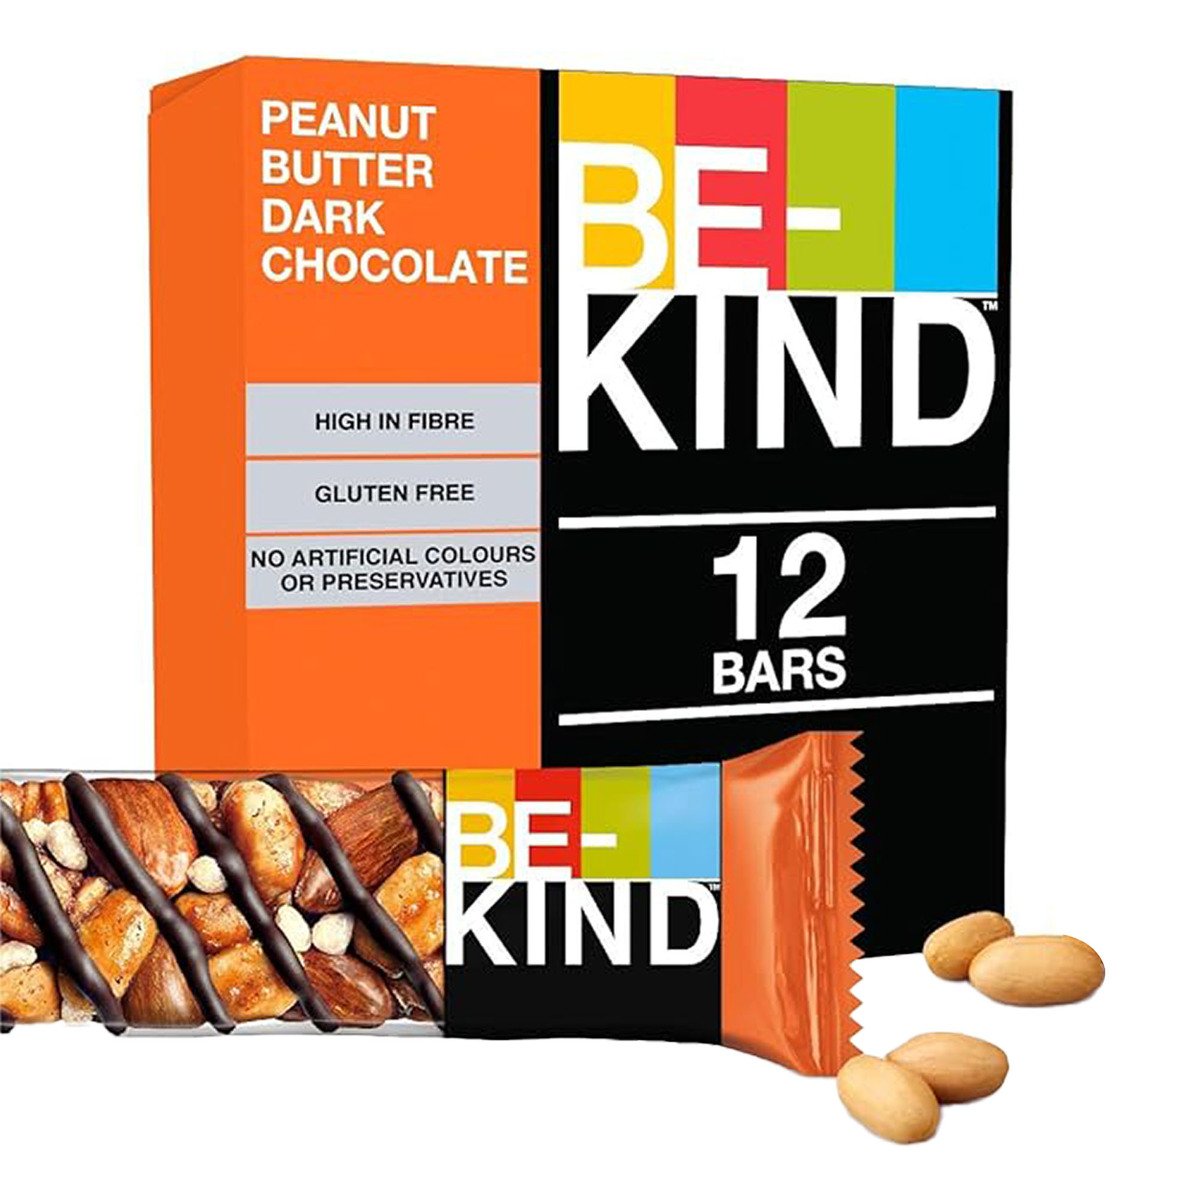 Be-Kind Dark Peanut Butter Dark Chocolate Bar 40 g